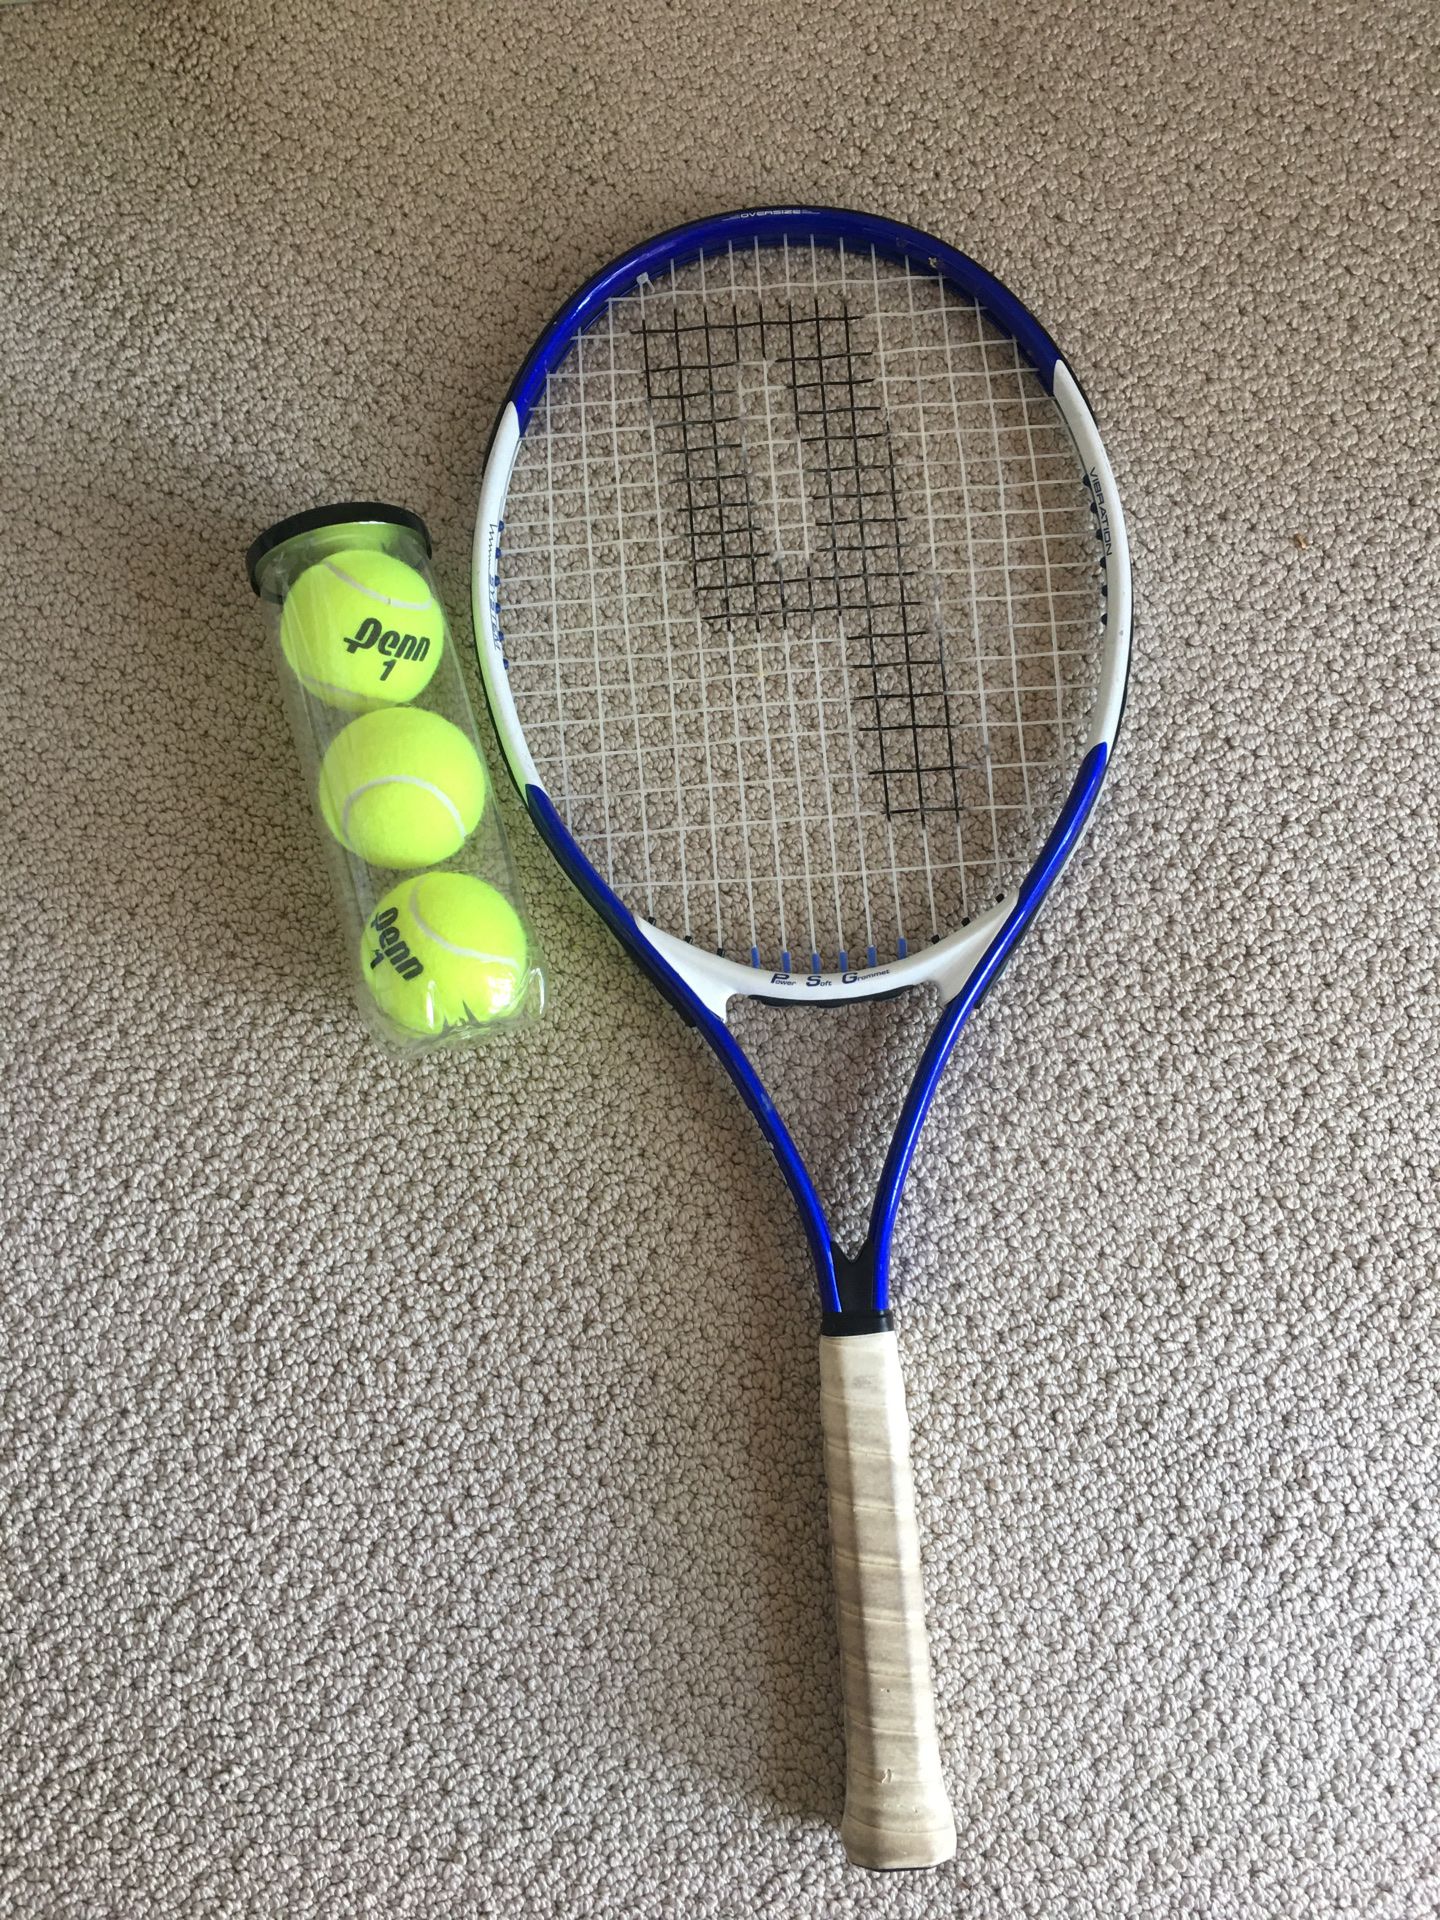 Prince tennis racket + new tennis 🎾.